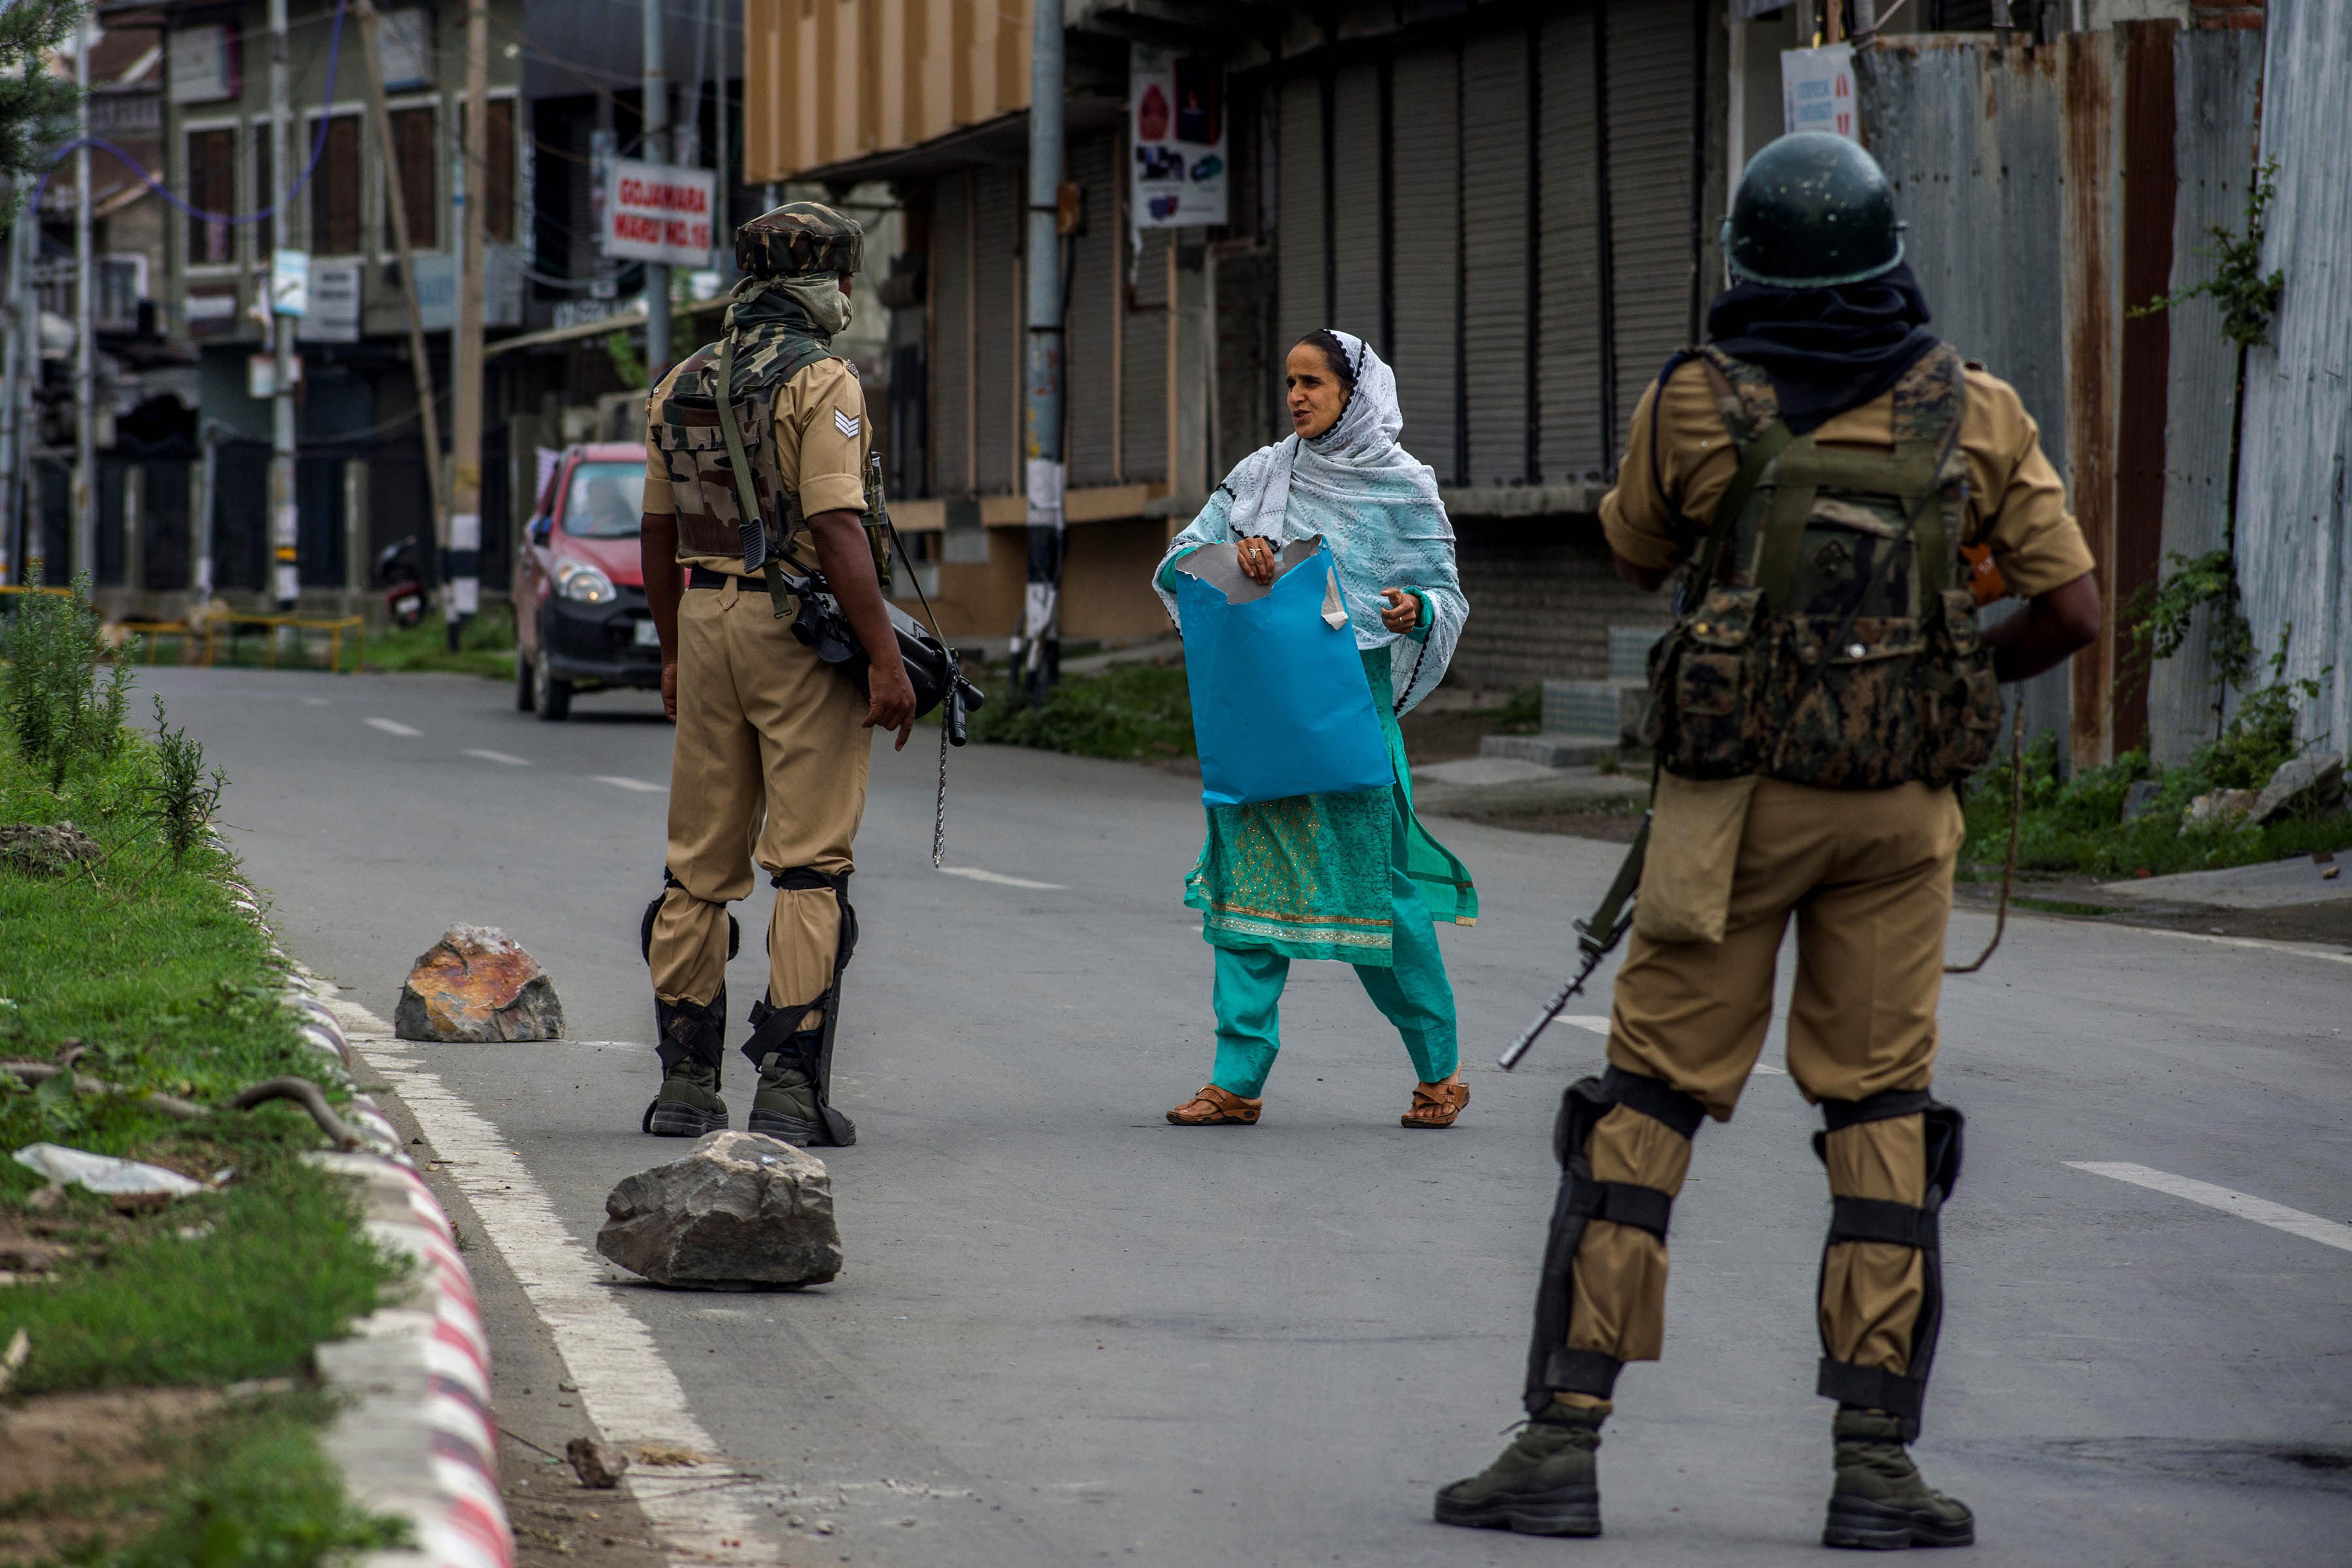 2 govt orders trigger new anxieties in Kashmir; Ladakh tensions seen as cause